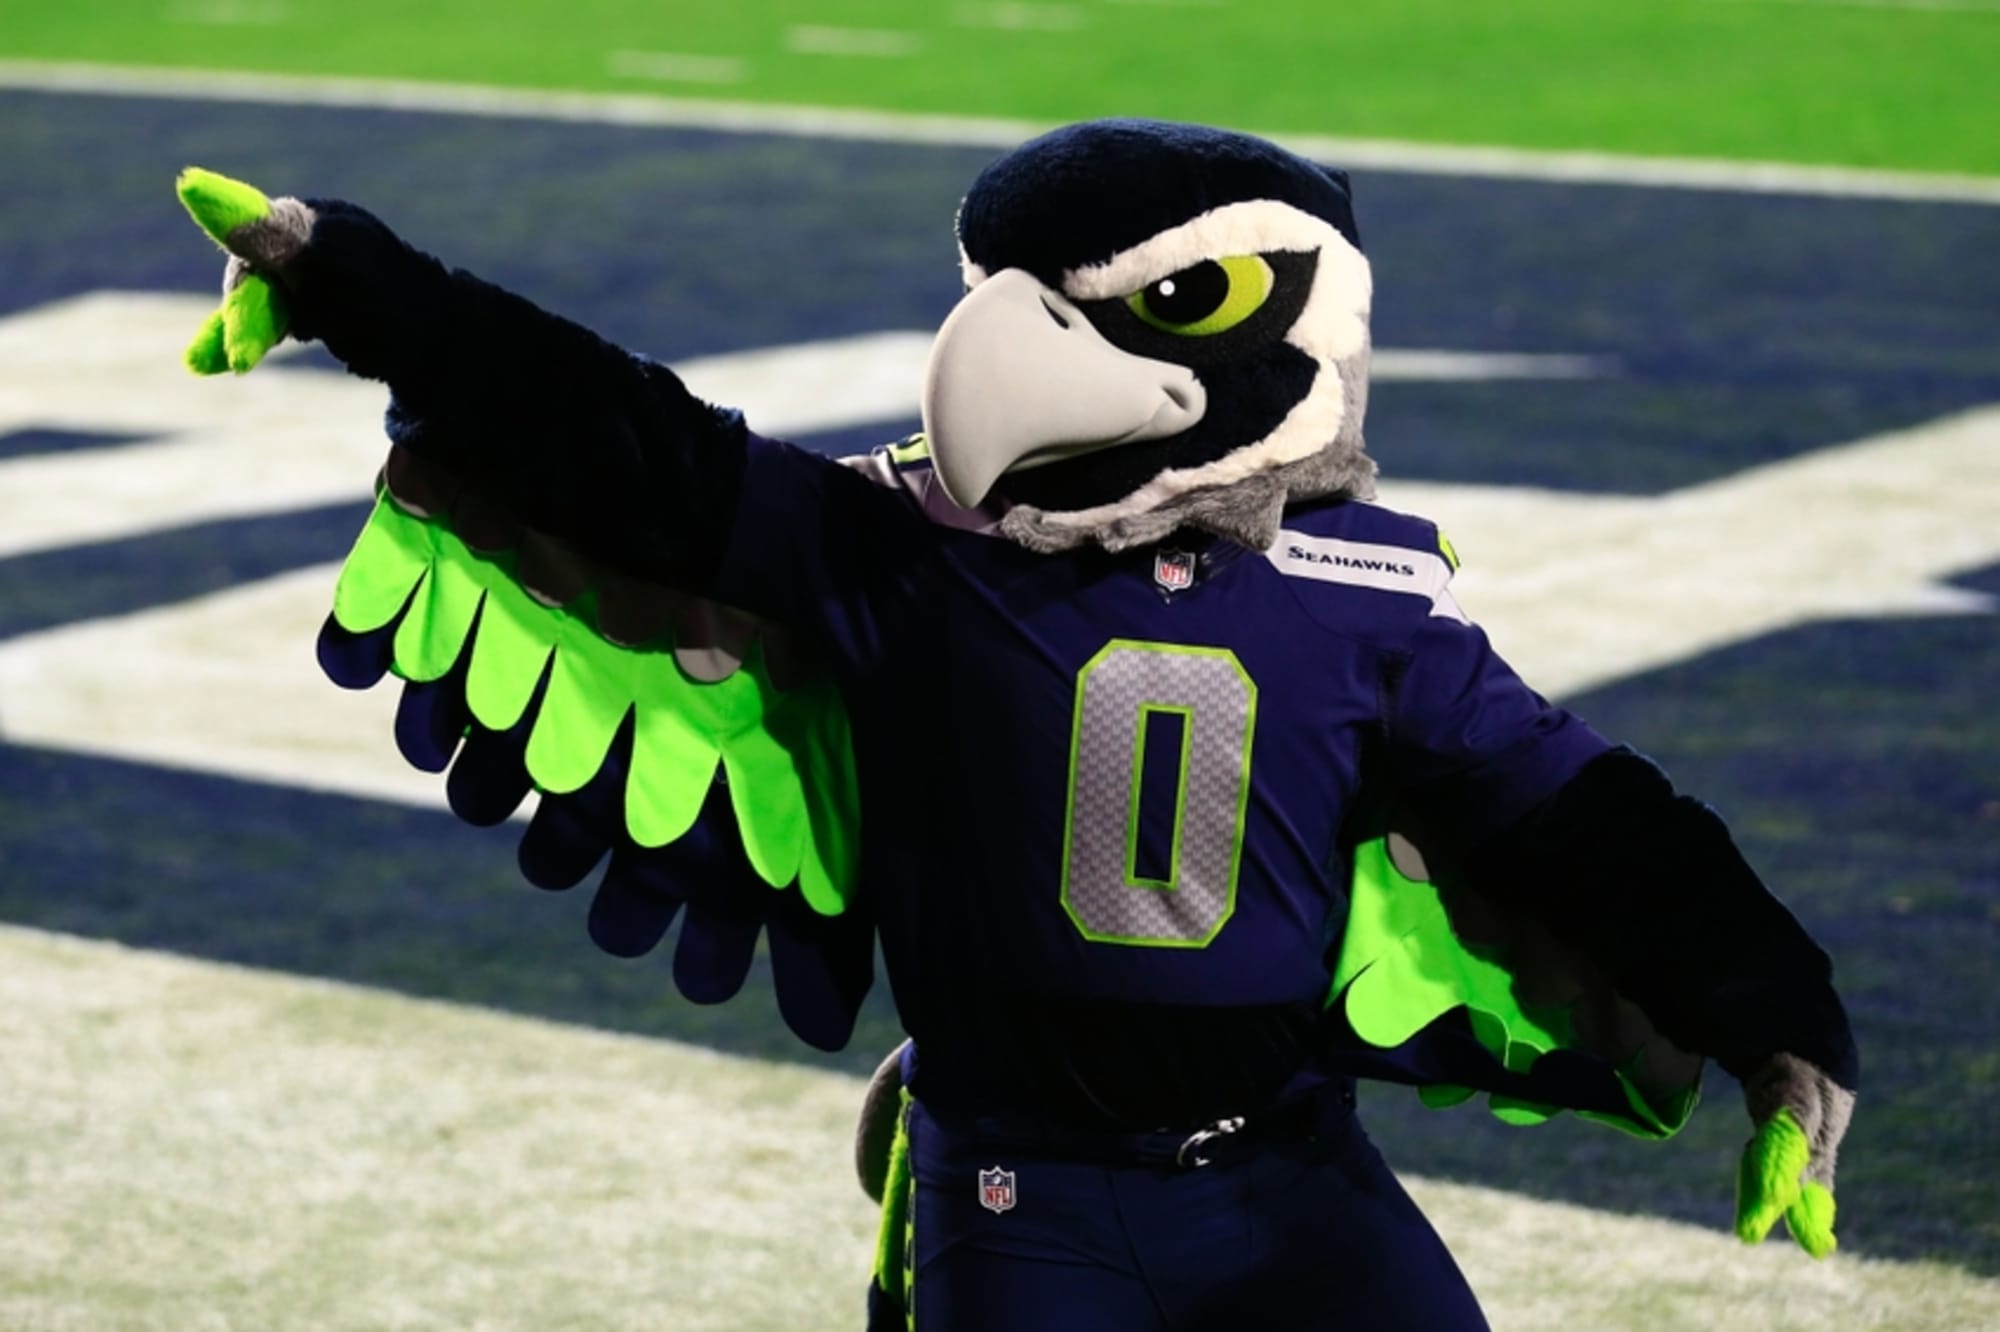 Seattle Seahawks 'Mug' Mascot to Celebrate Big Play (Video)